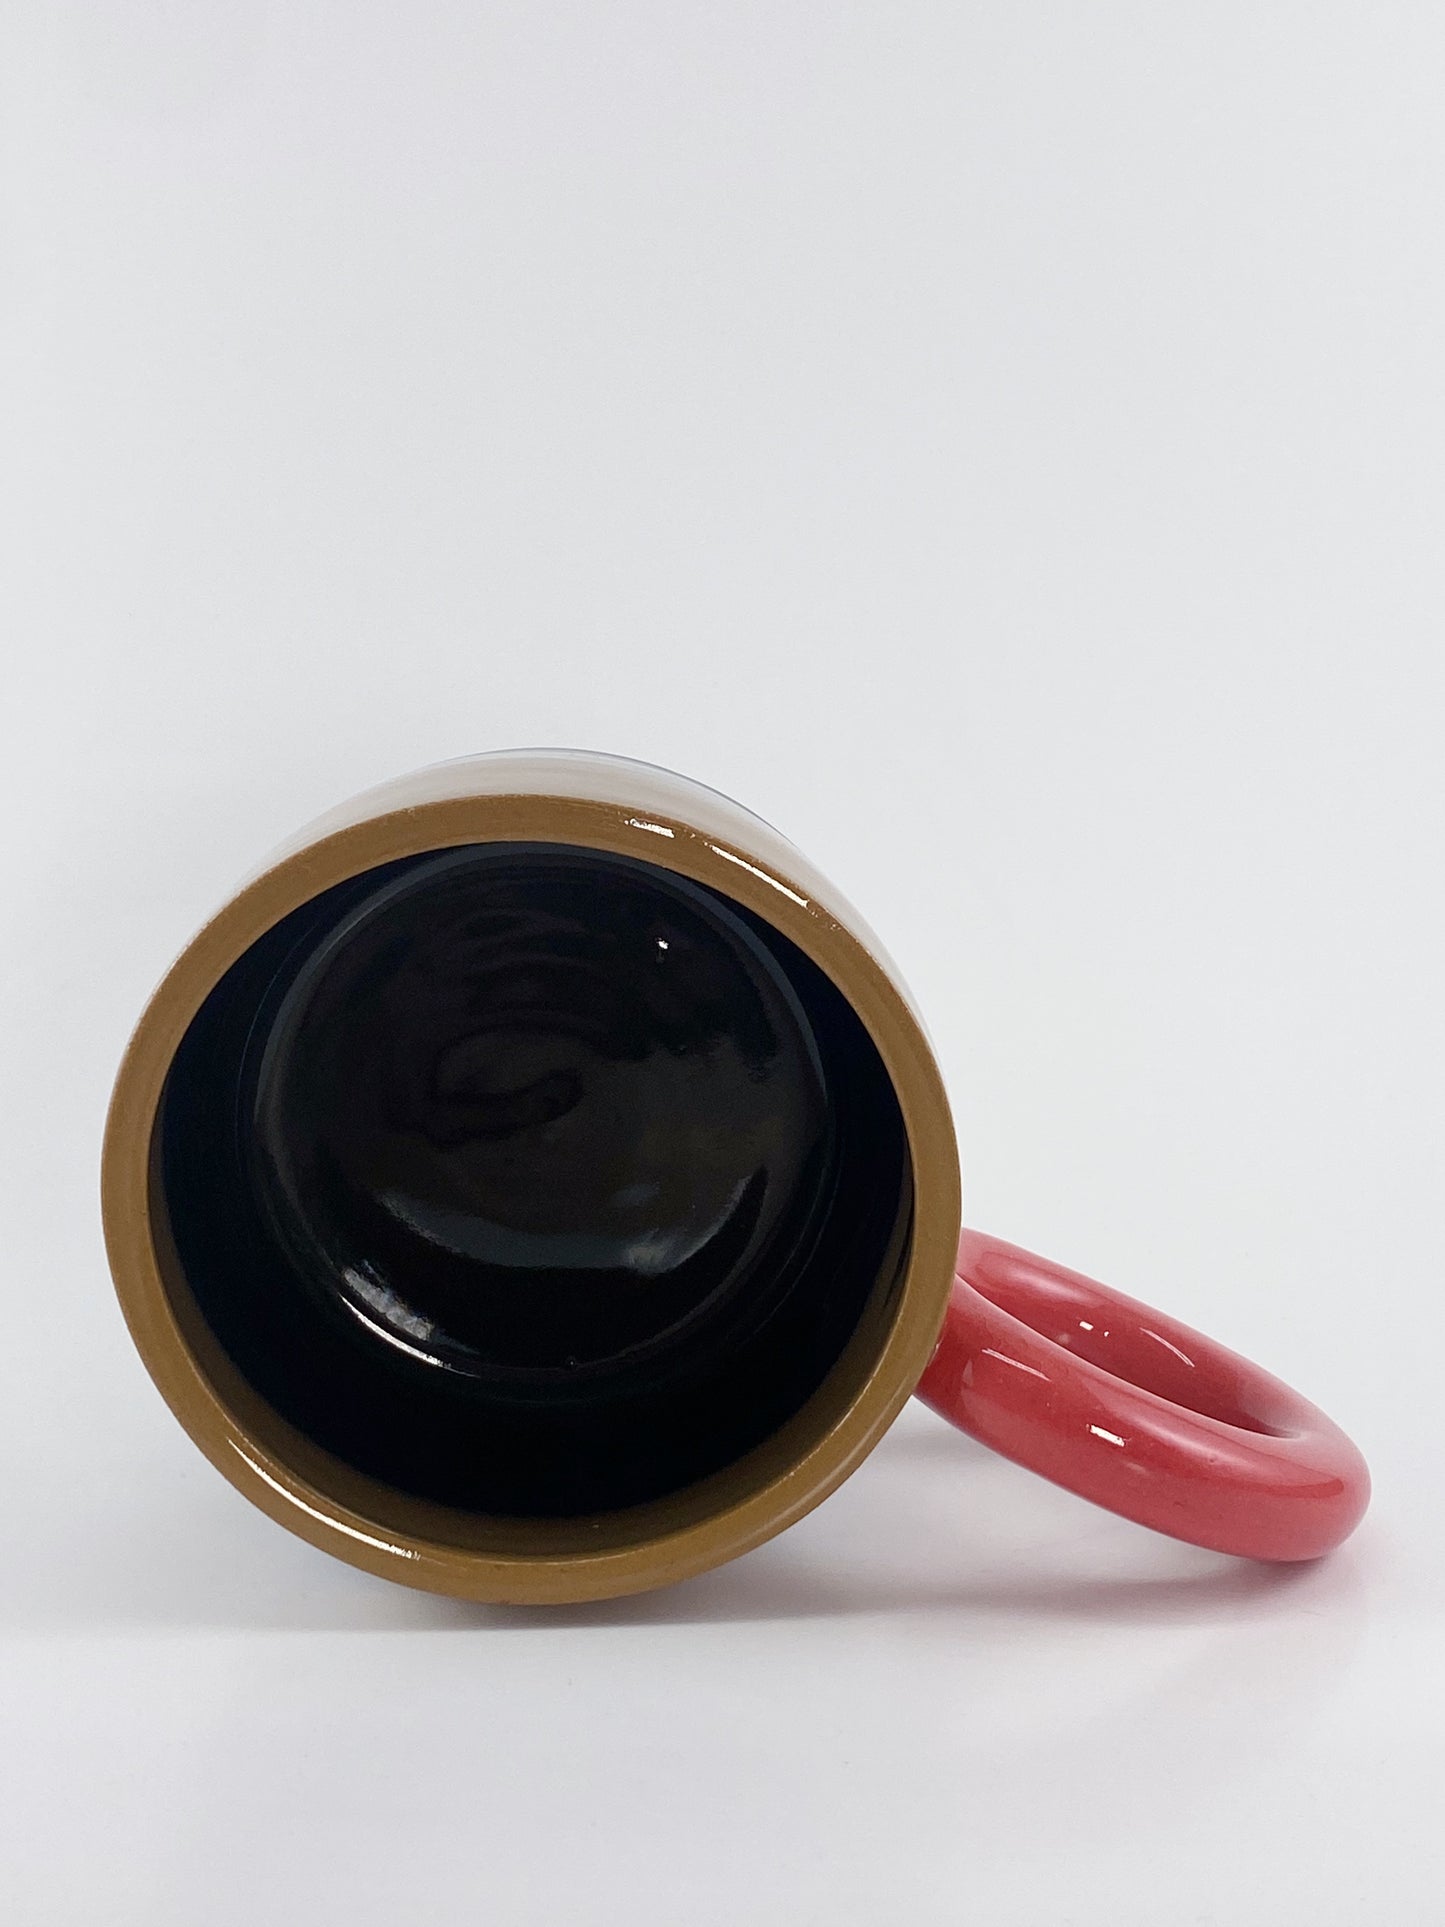 Tricolor Mug - Red, Brown, Black